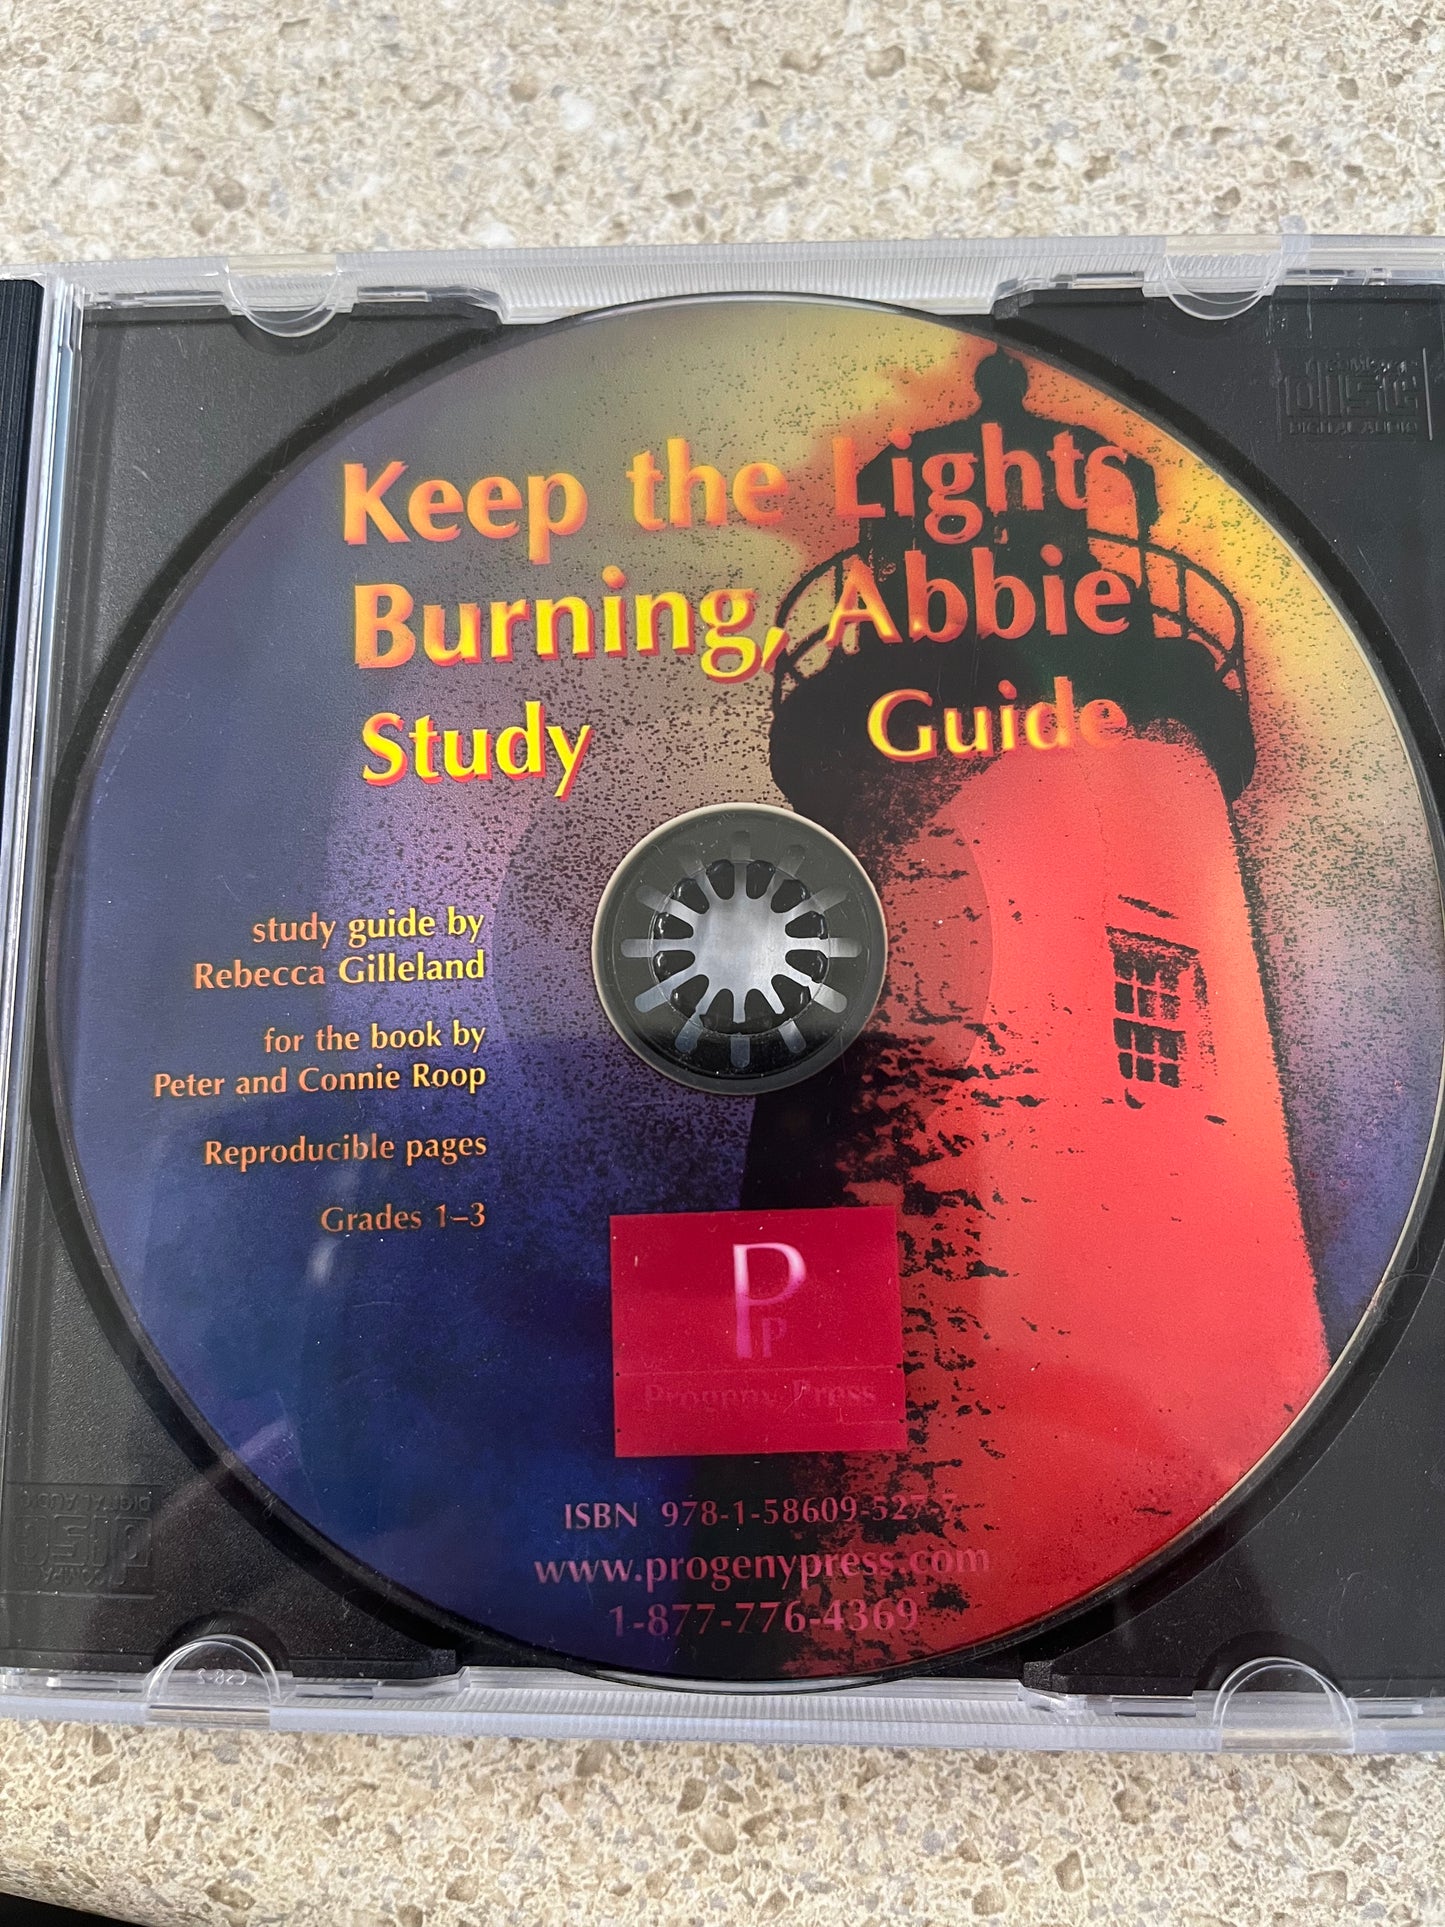 Keep the Light Burning, Abbie - Study Guide CD-ROM